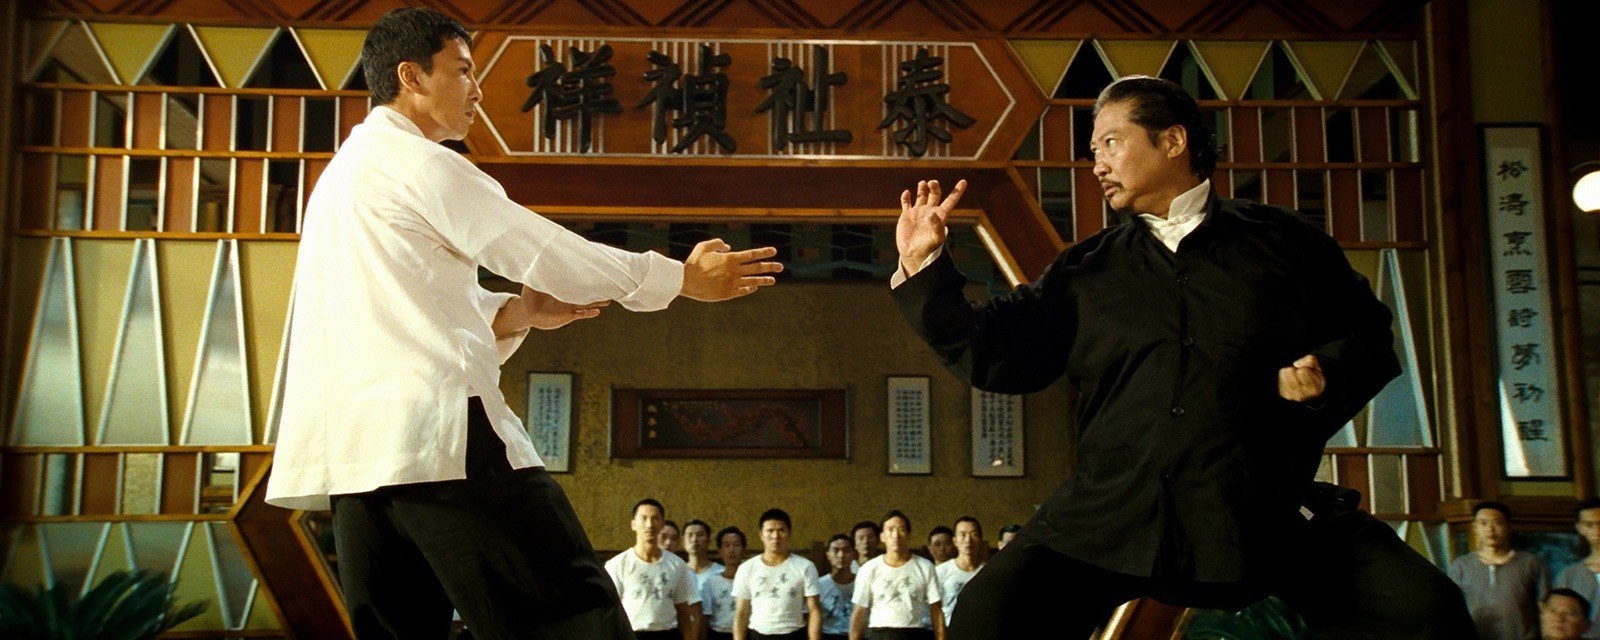 IP MAN 4 International Trailer, Chinese Drama Action Martial Arts  Adventure